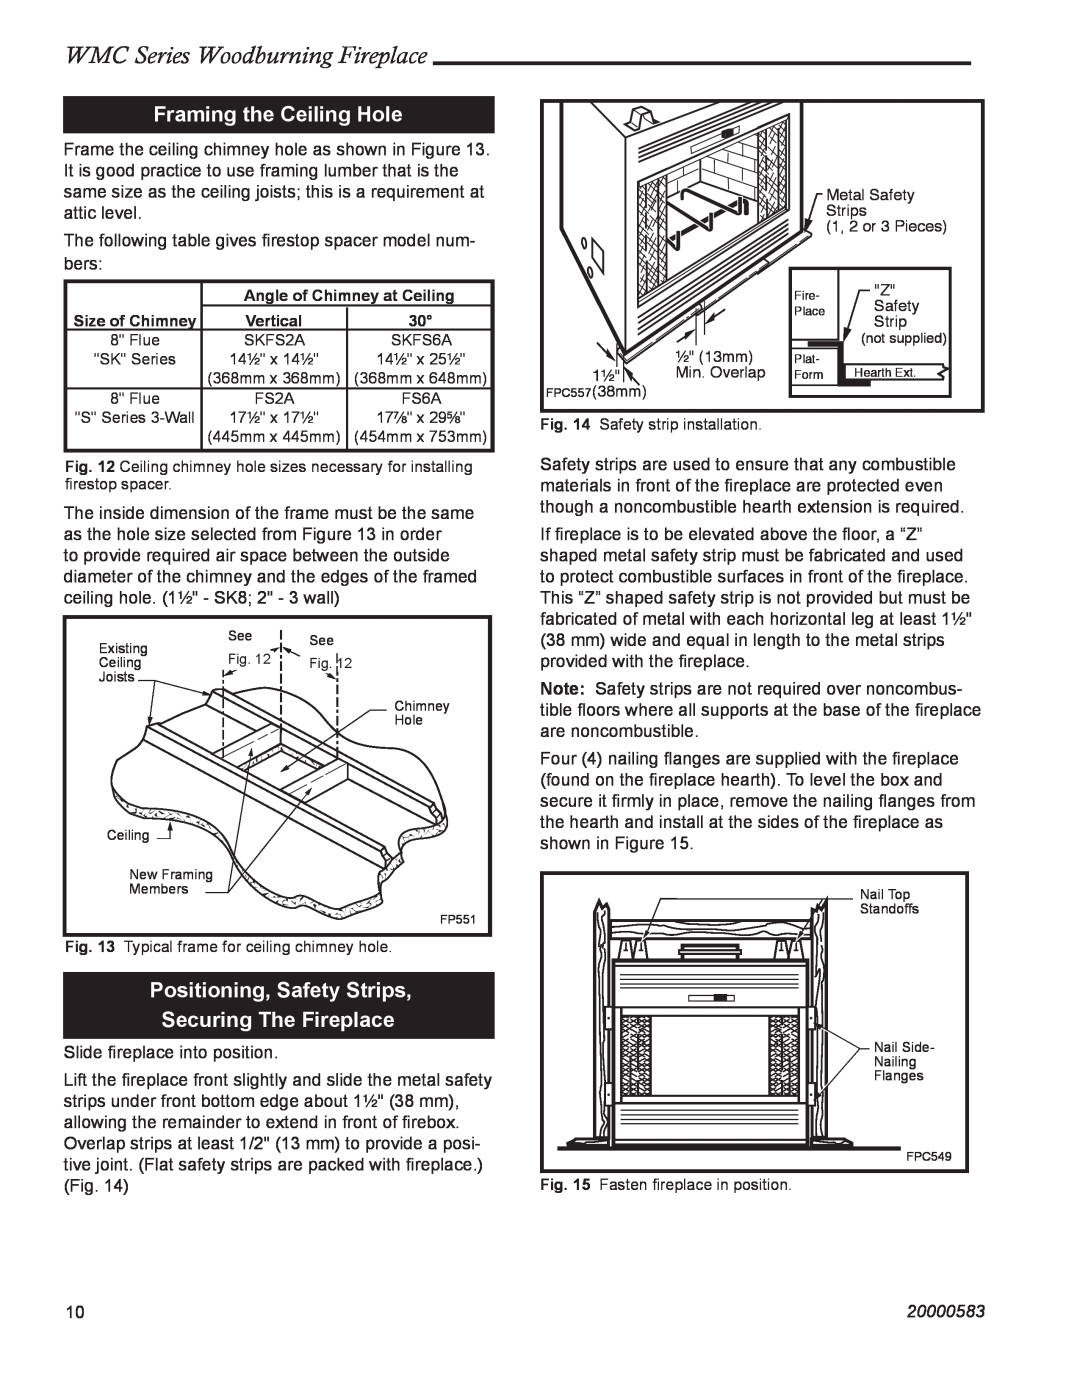 CFM Corporation WMC36 WMC42 manual WMC Series Woodburning Fireplace, Framing the Ceiling Hole, 20000583 